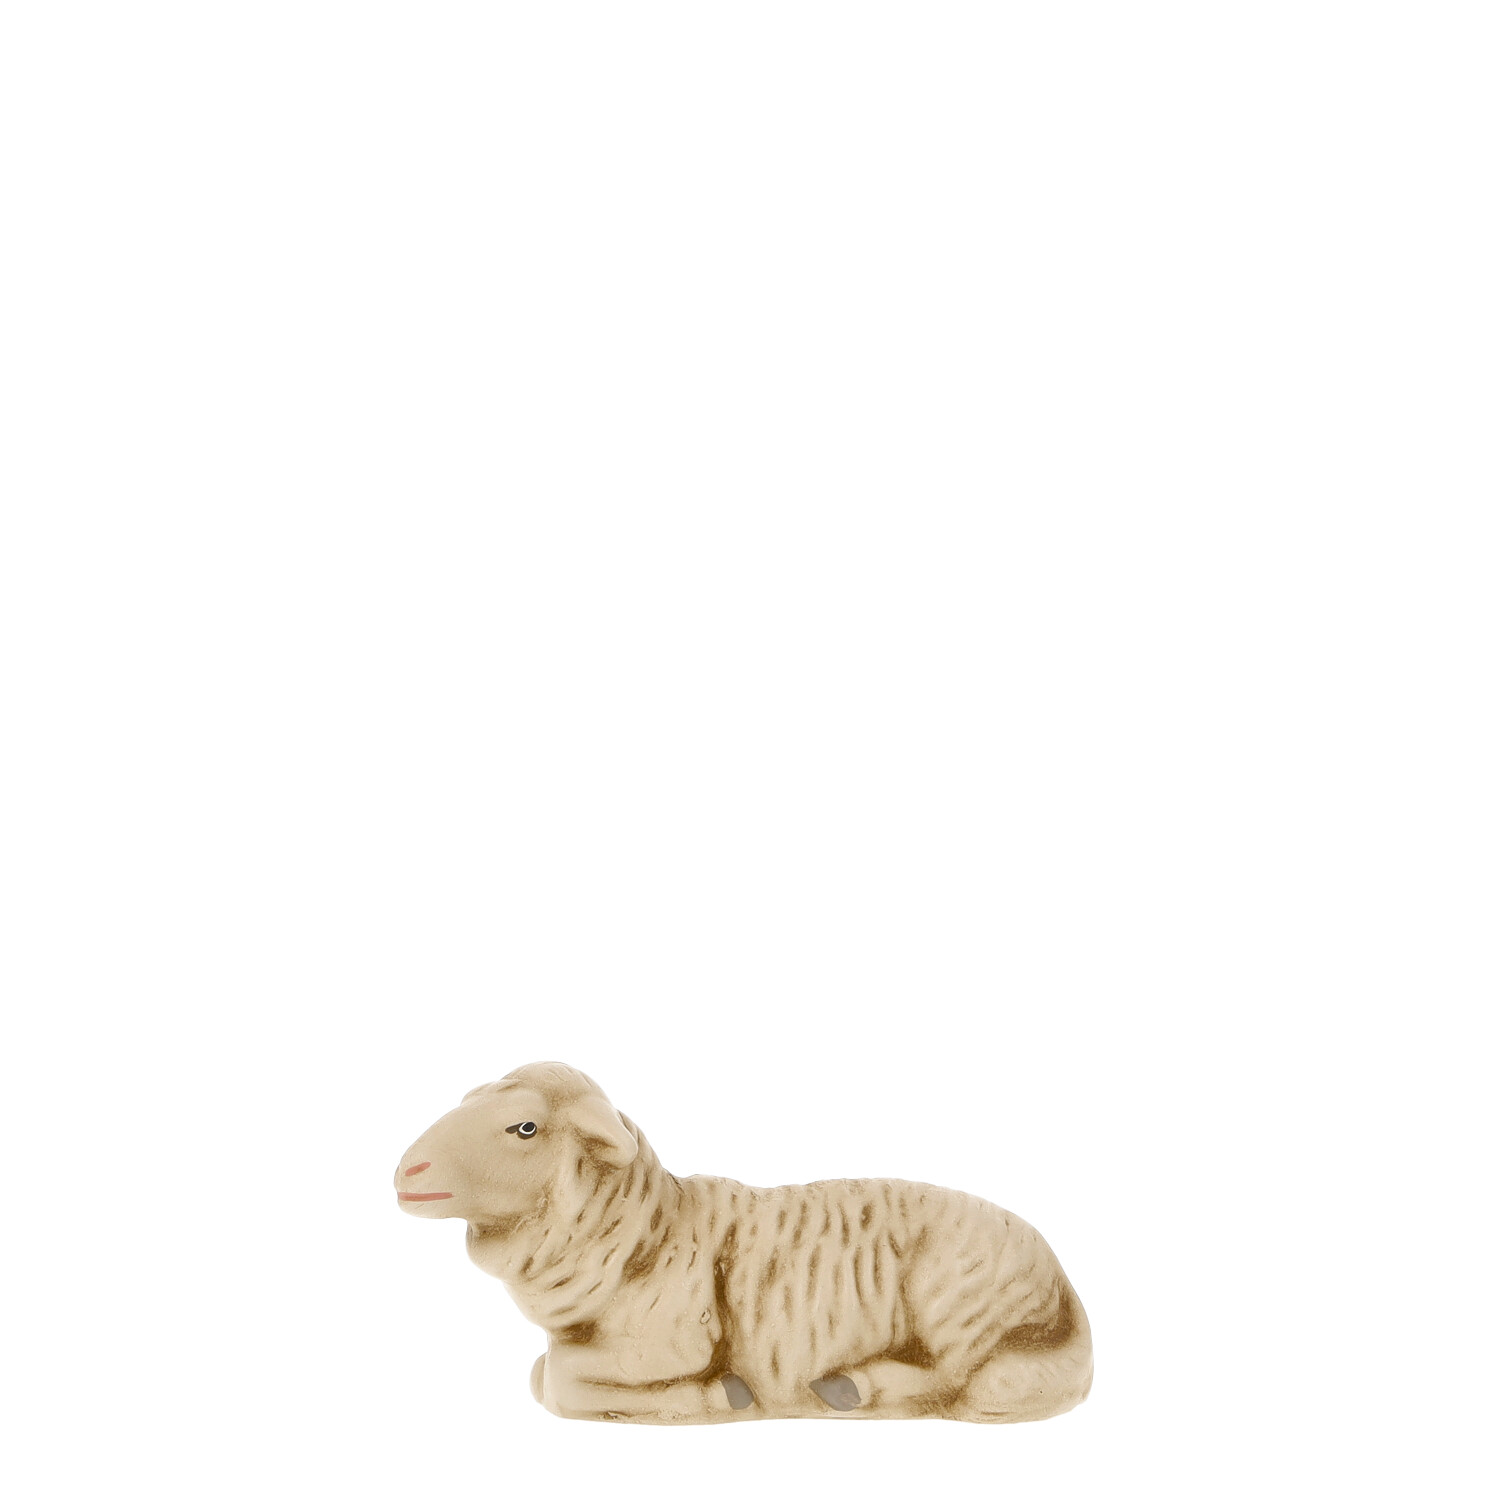 Lying sheep - Marolin Nativity figure - made in Germany